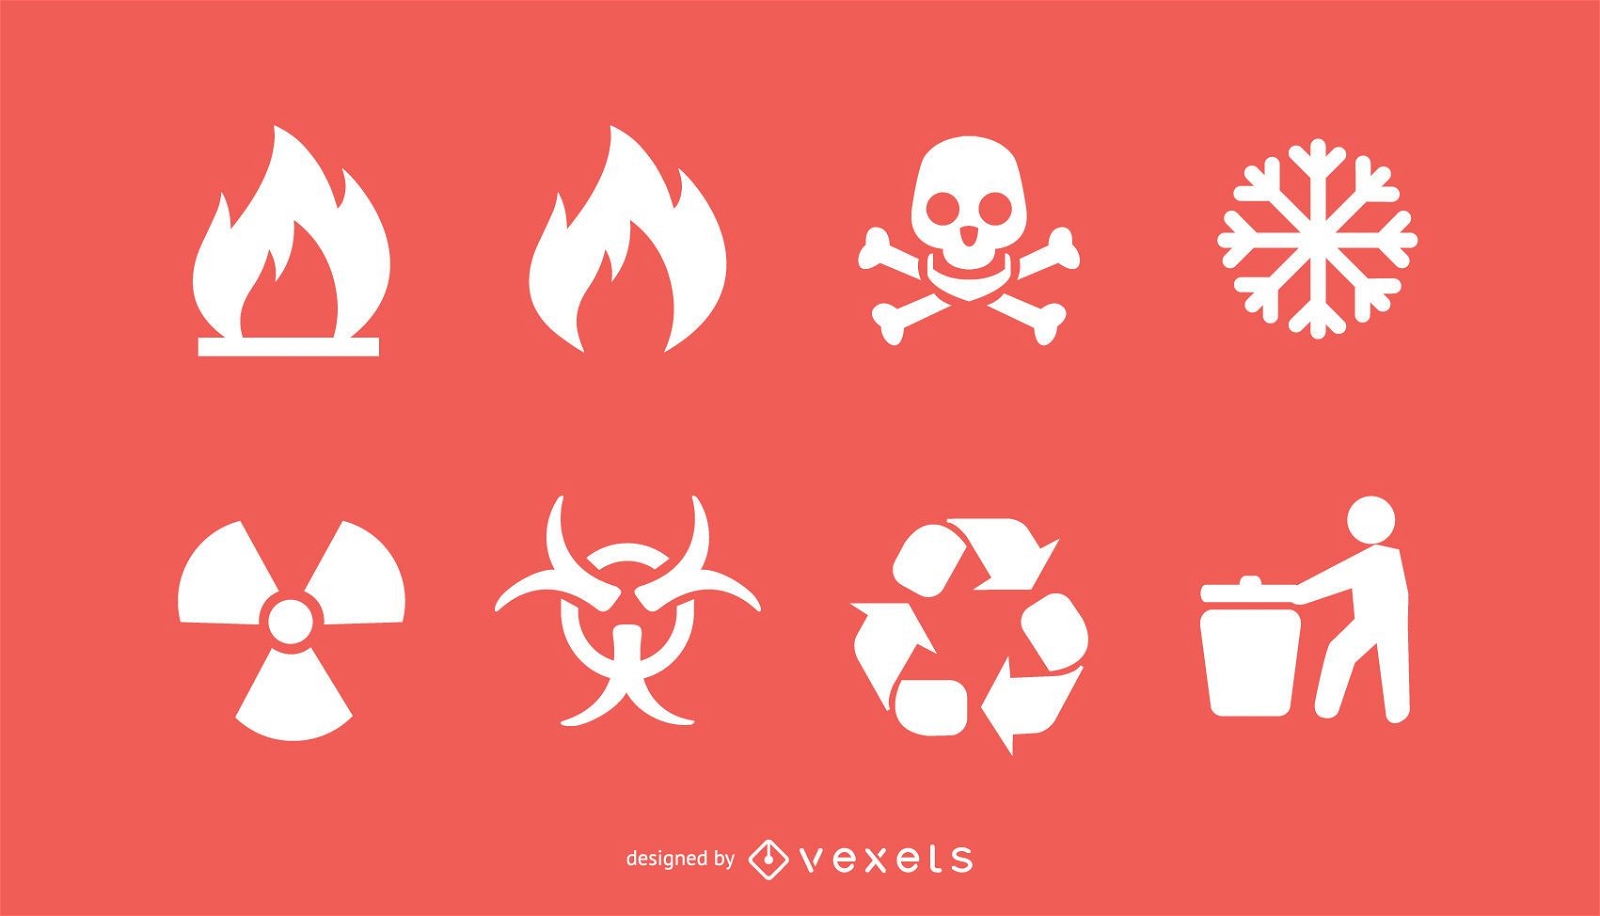 Bio Hazard and recycle icon set